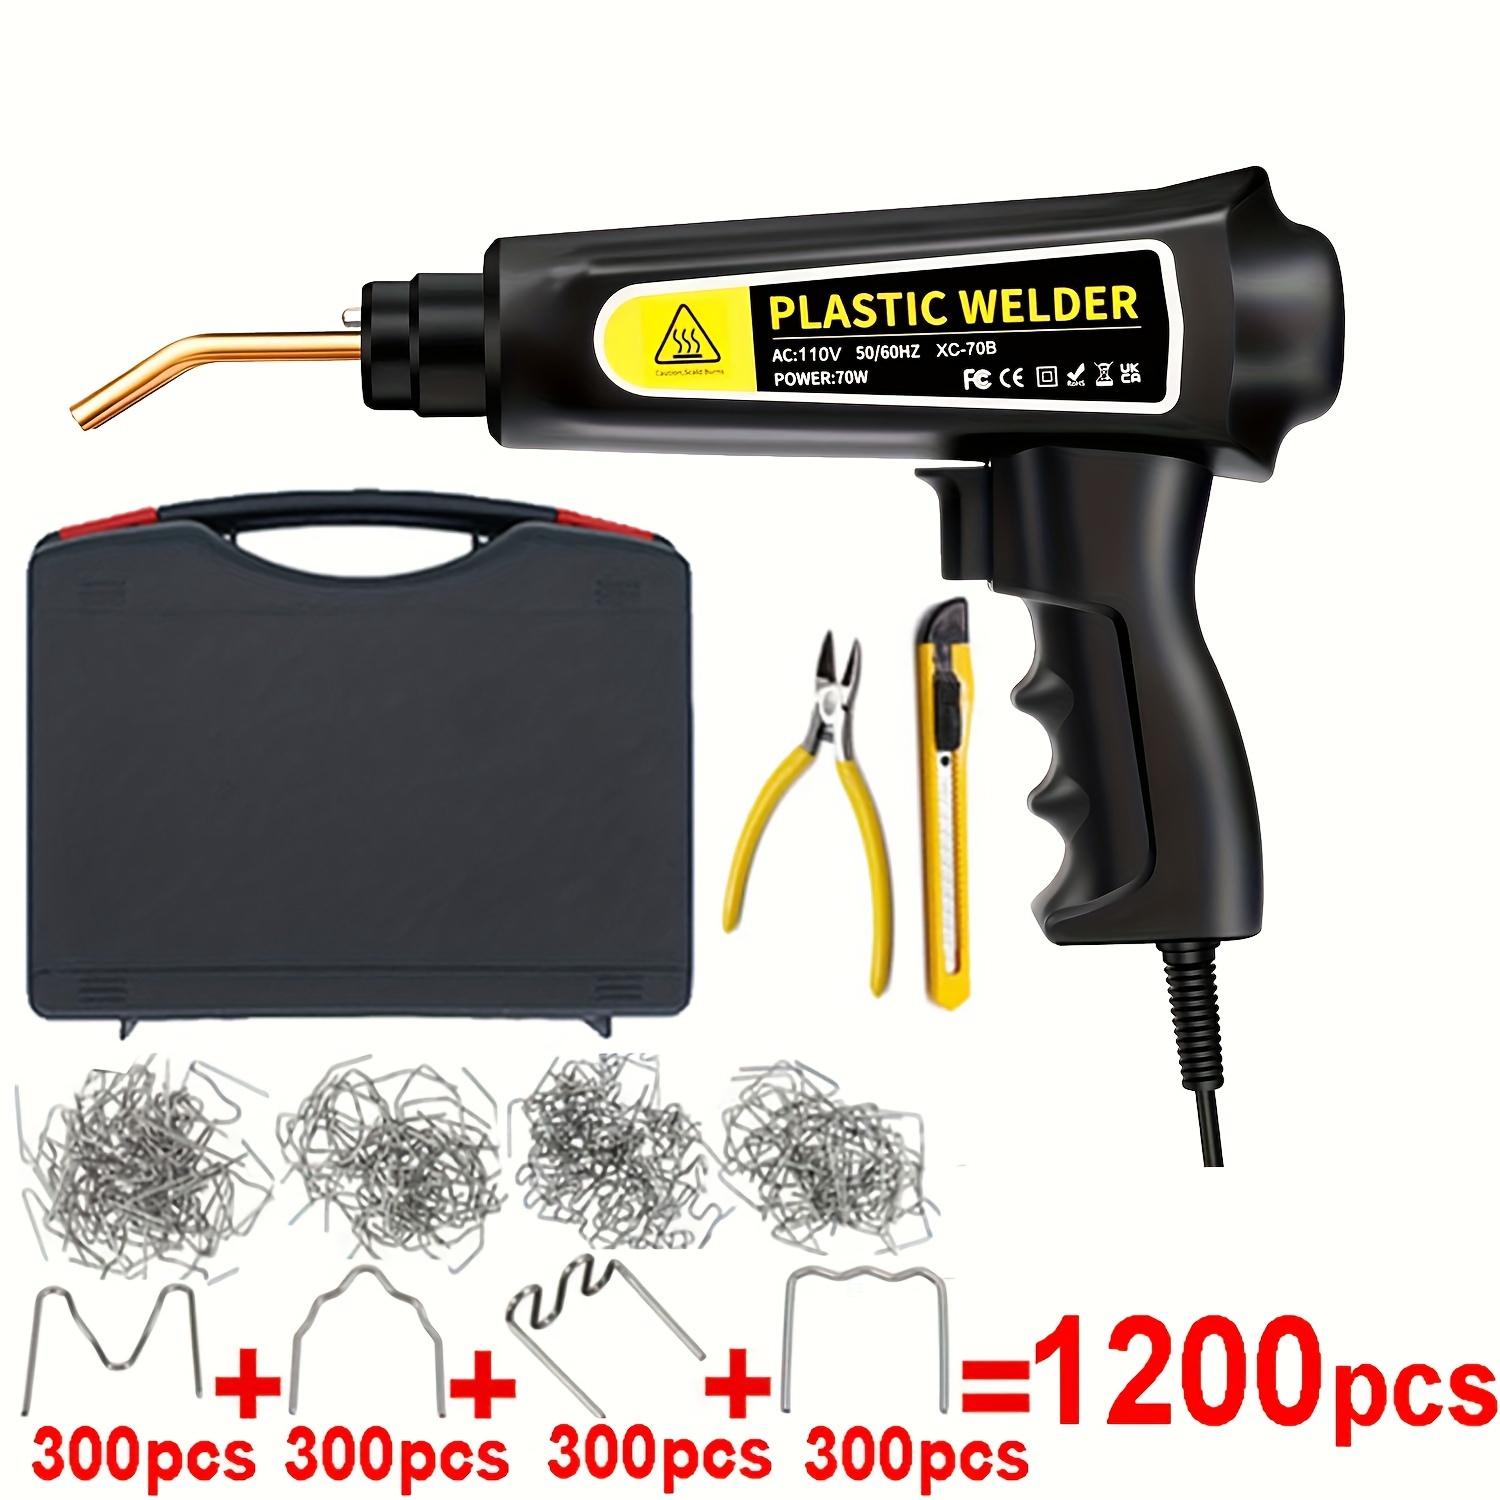 Plastic Welding Machine, 70W Hot Stapler Plastic Repair Gun